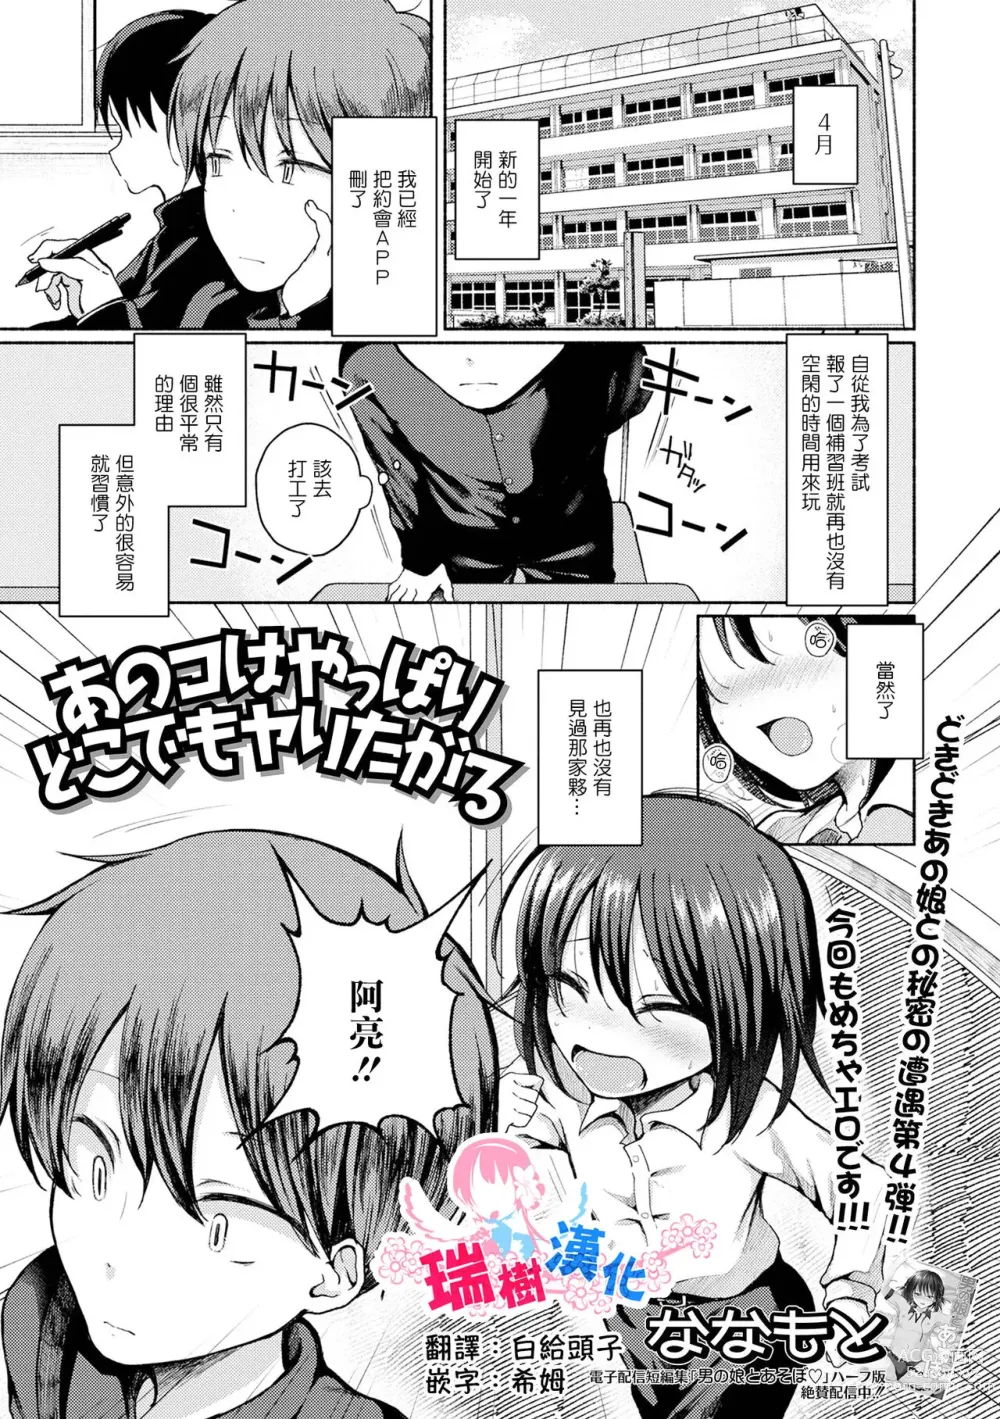 Page 1 of manga Anoko wa Yappari Doko demo Yaritagaru